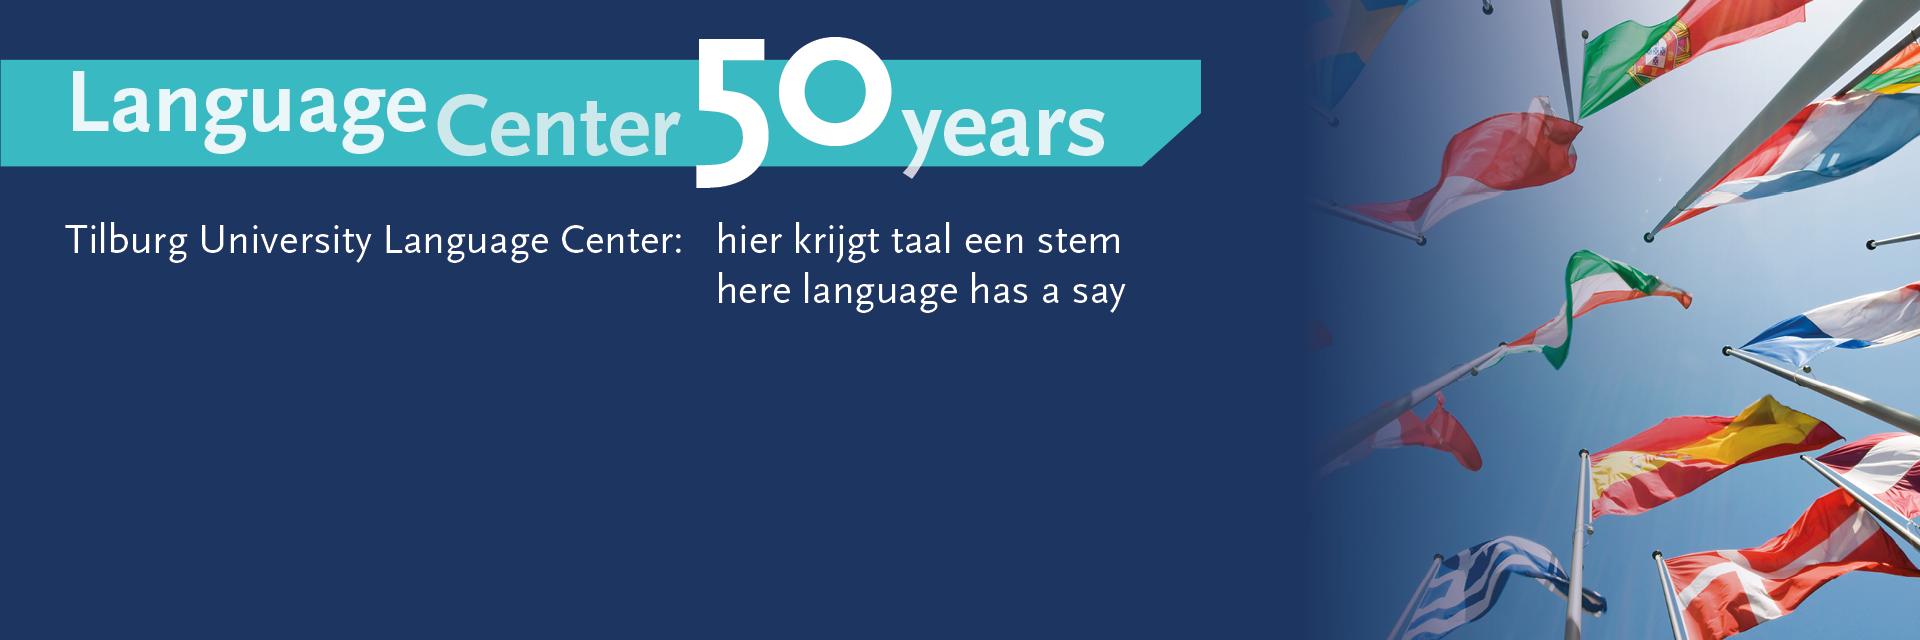 Language Center 50 jaar